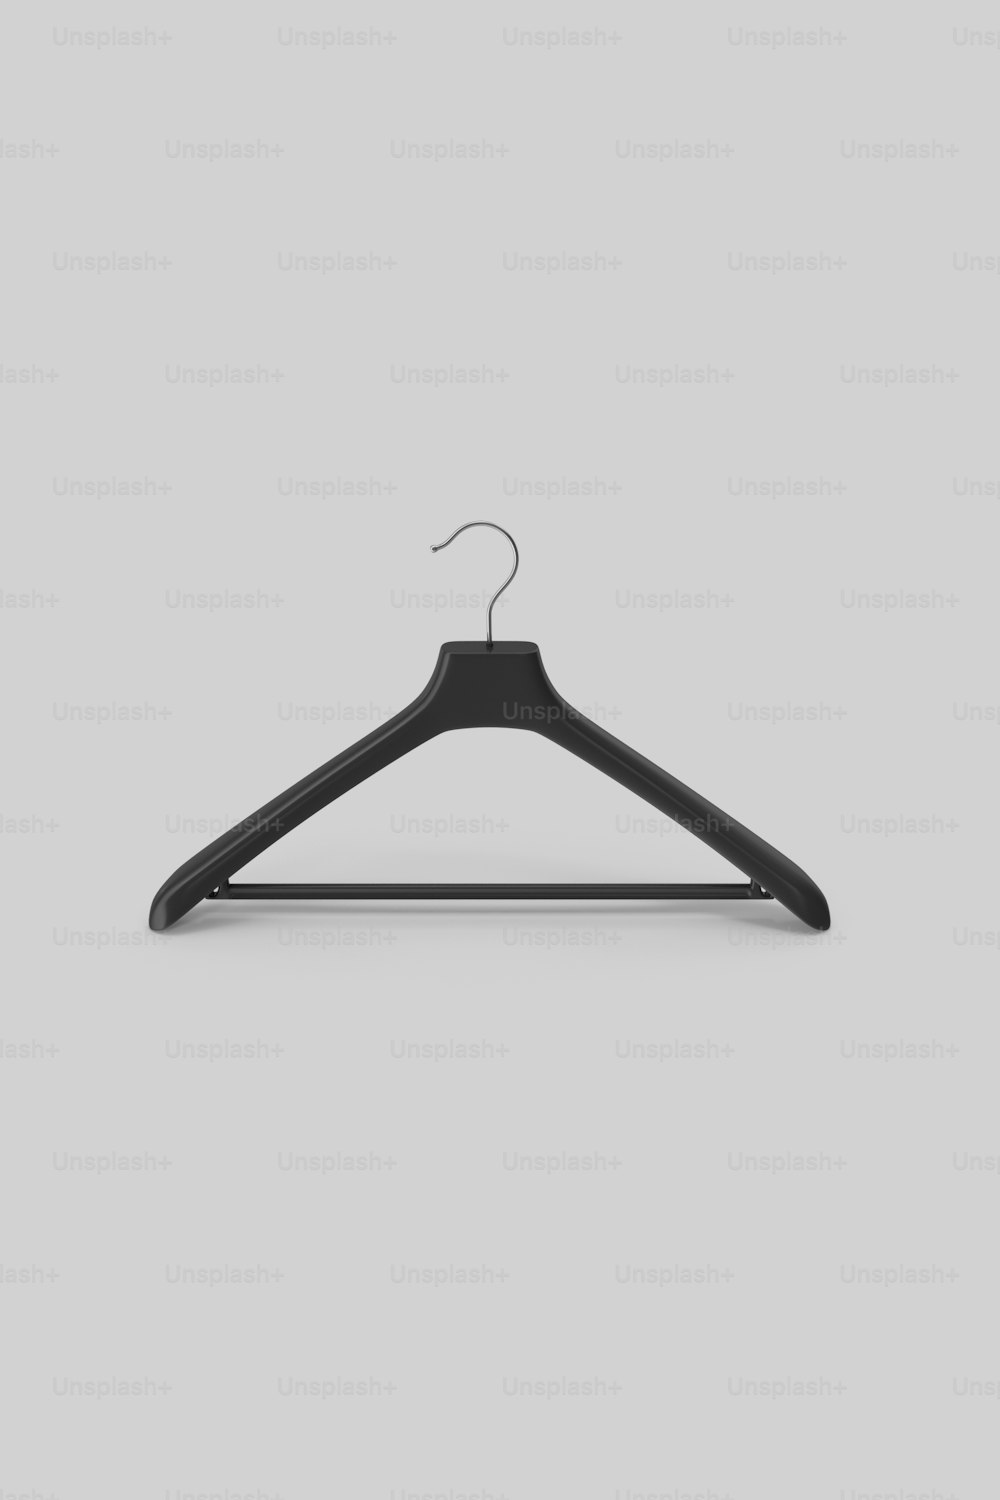 500+ Clothes Hanger Pictures  Download Free Images on Unsplash